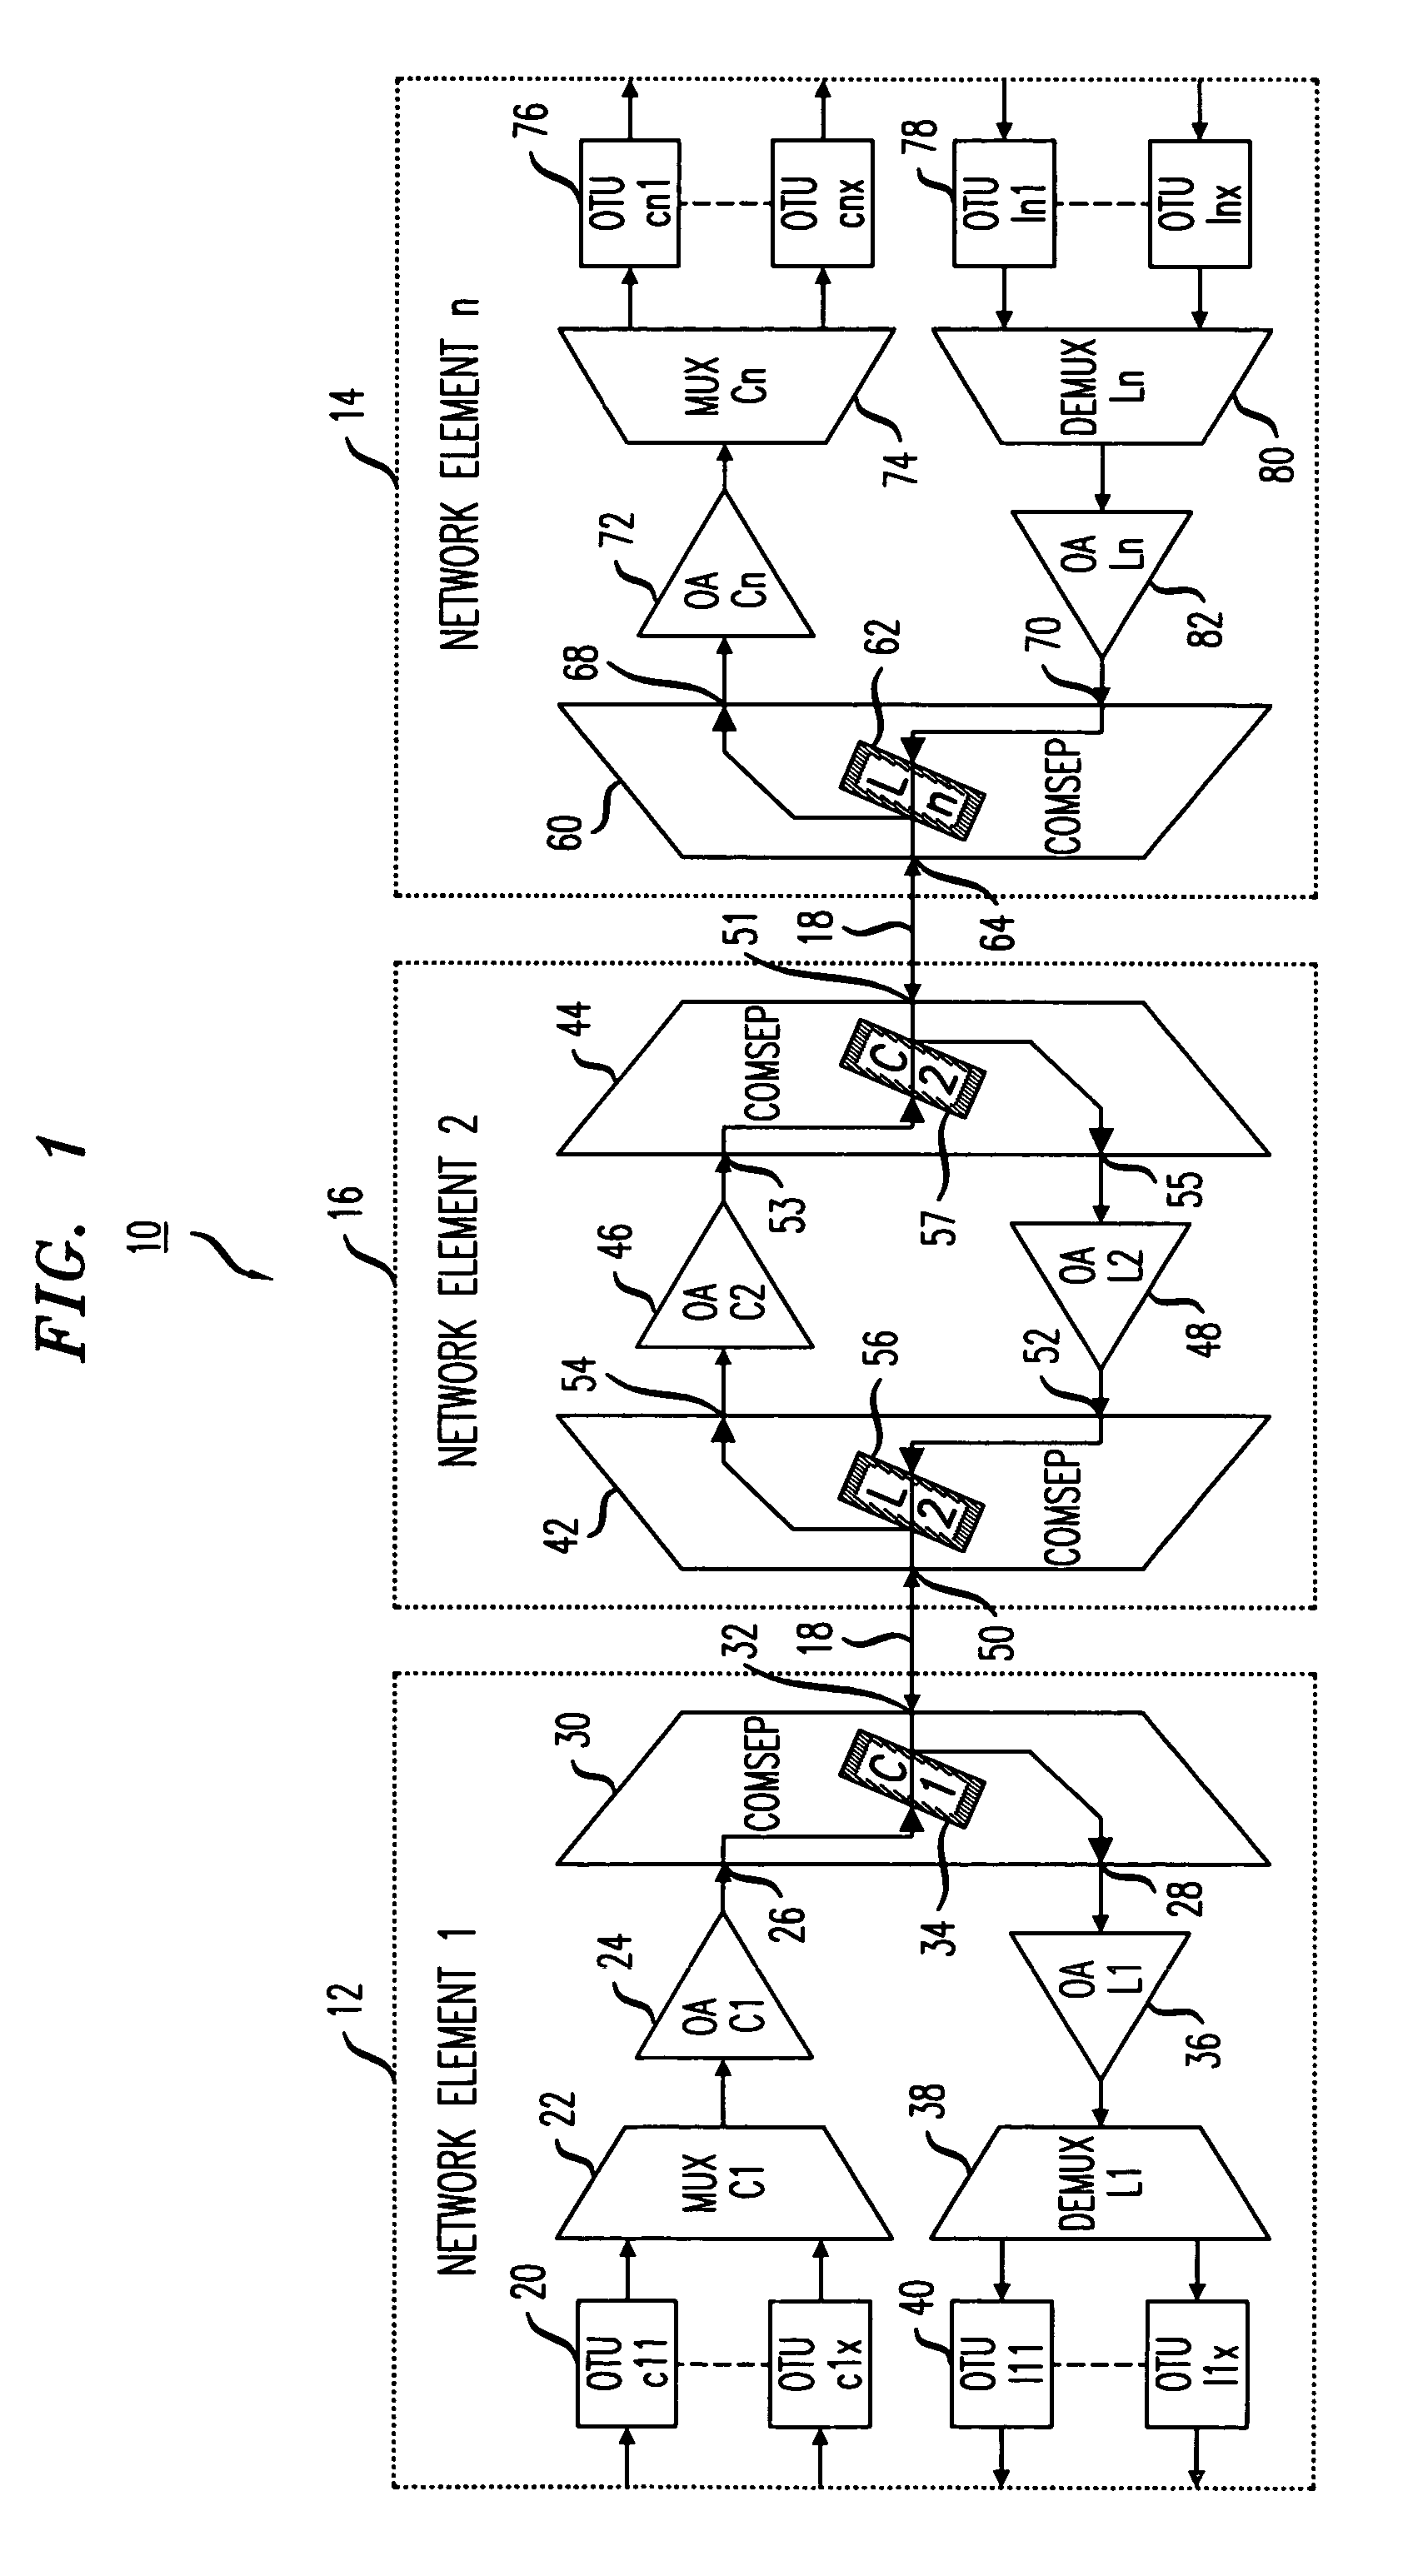 Bi-directional optical transmission using dual channel bands